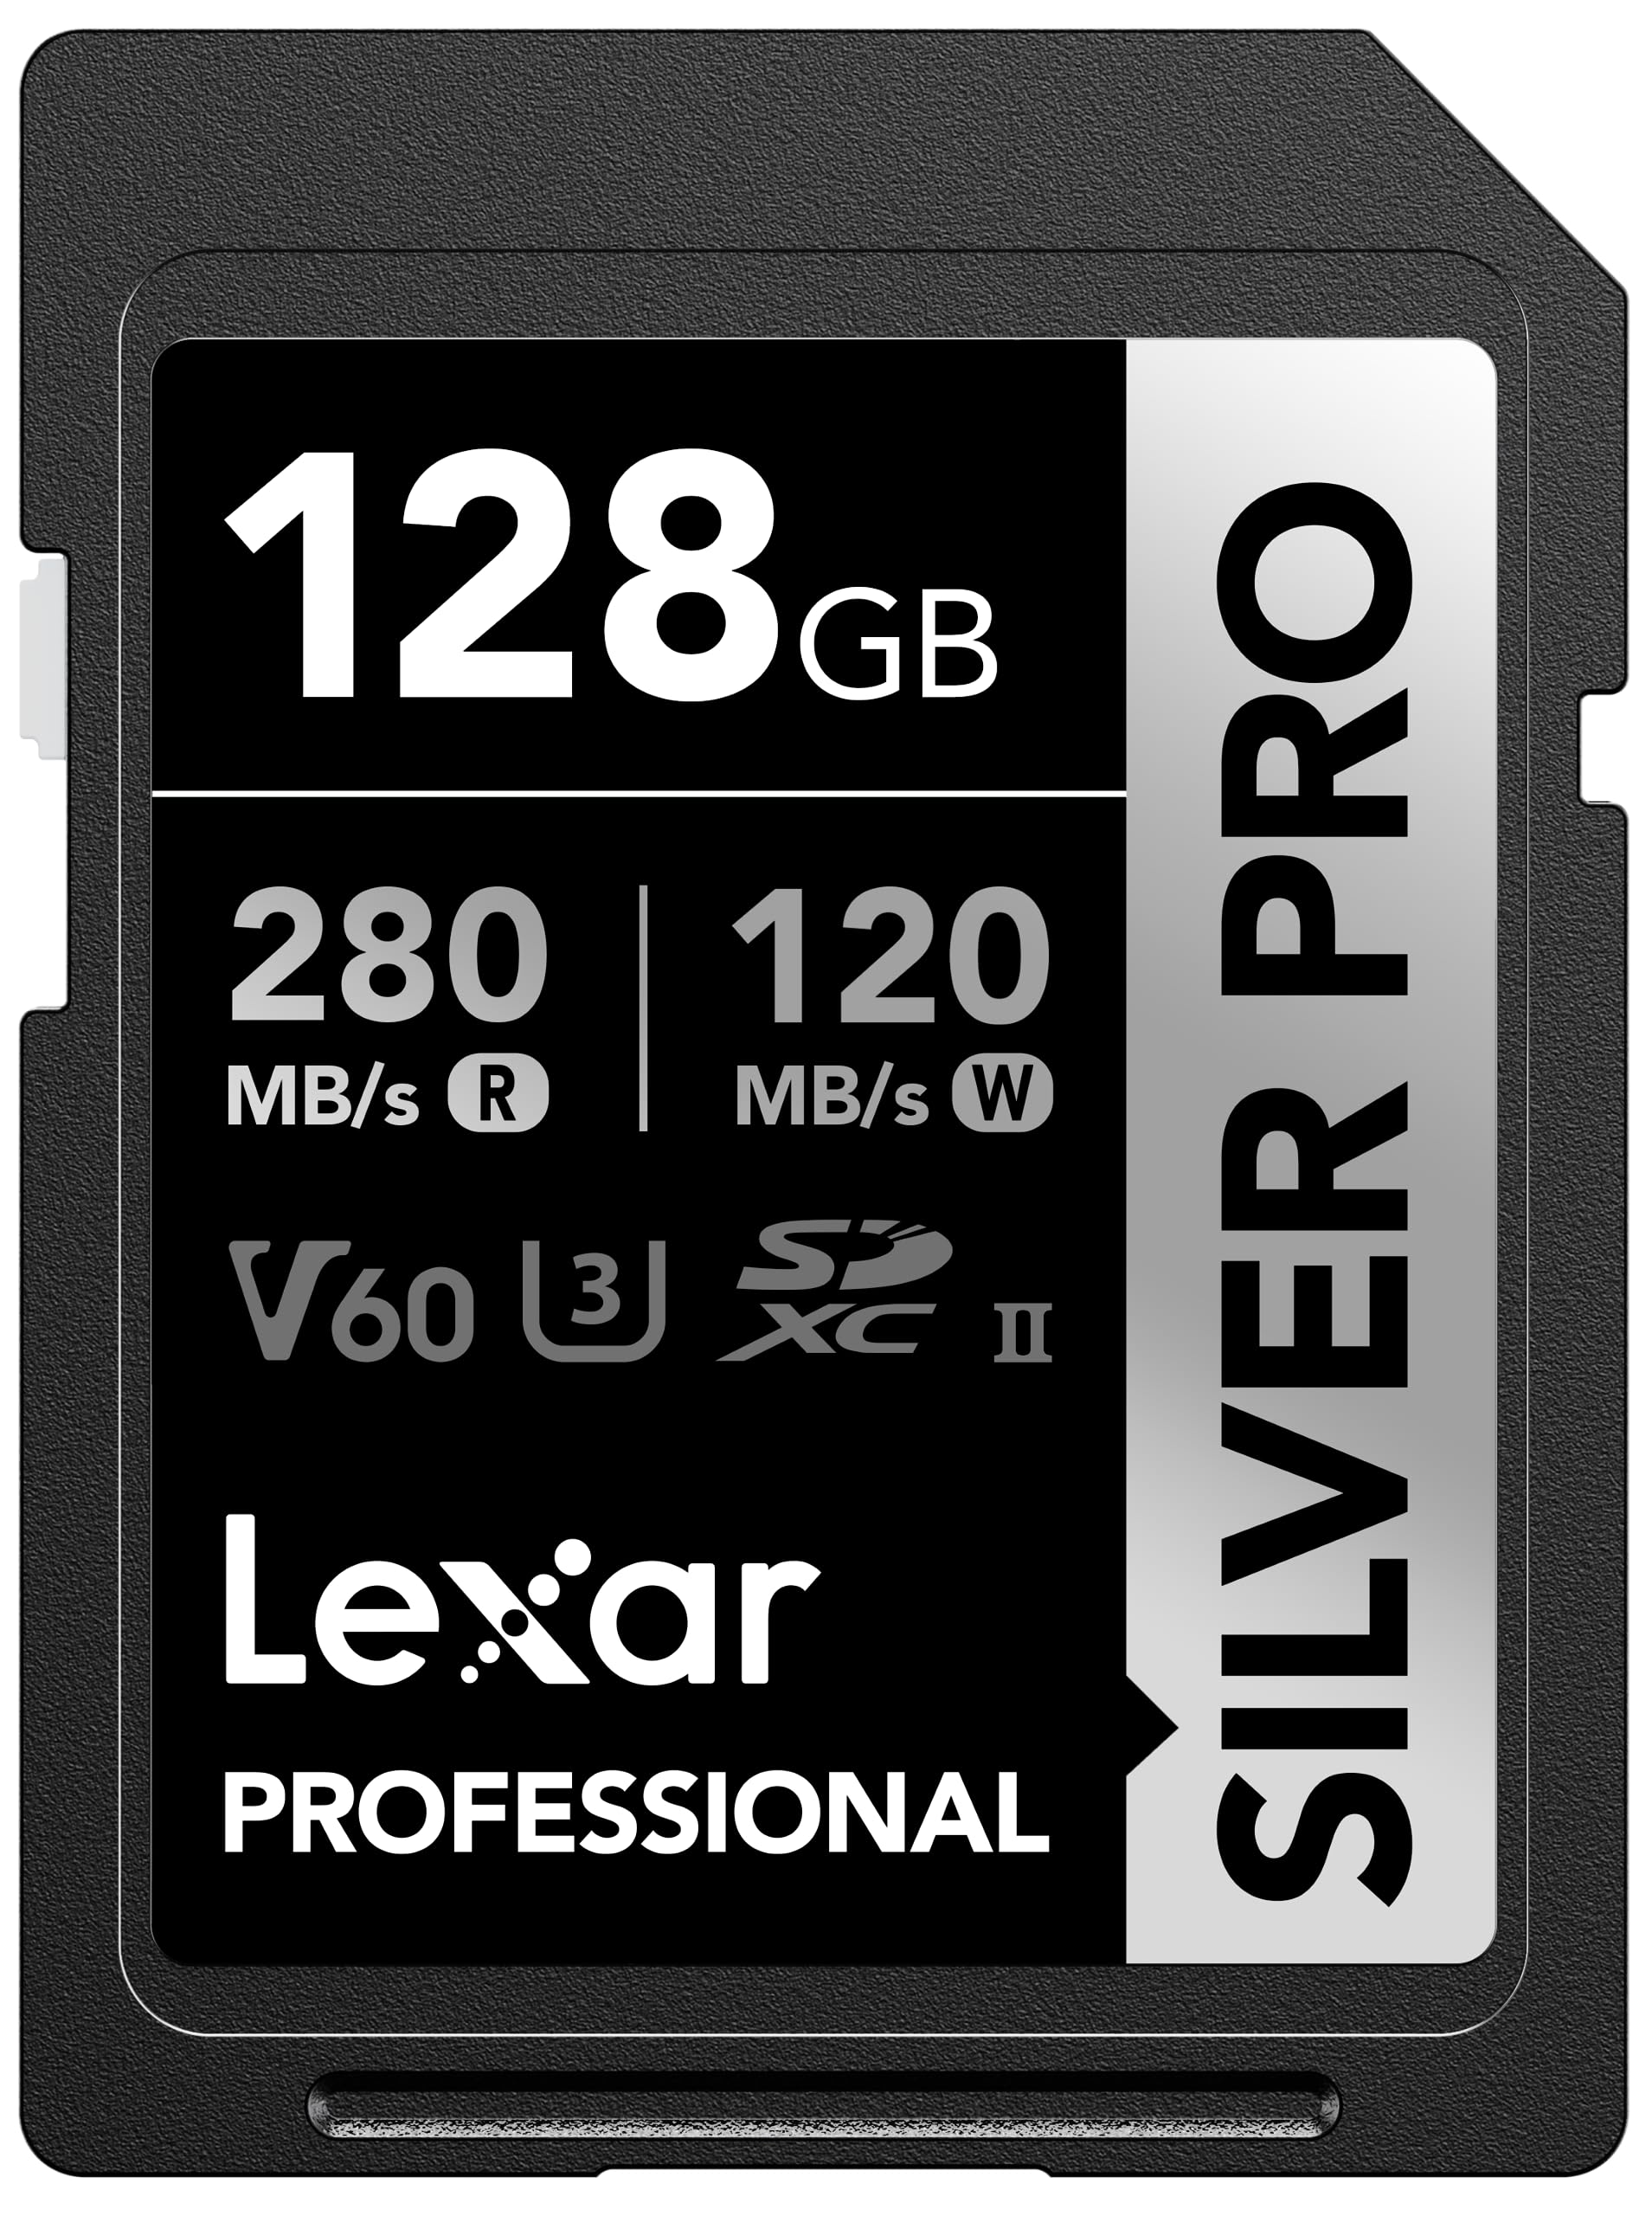 Lexar 128GB Professional 128GB SILVER PRO SDXC Memory Card, UHS-II, C10, U3, V60, Full-HD & 4K Video, Up To 280MB/s Read, for Professional Photographer, Videographer, Enthusiast (LSDSIPR128G-BNNNU)